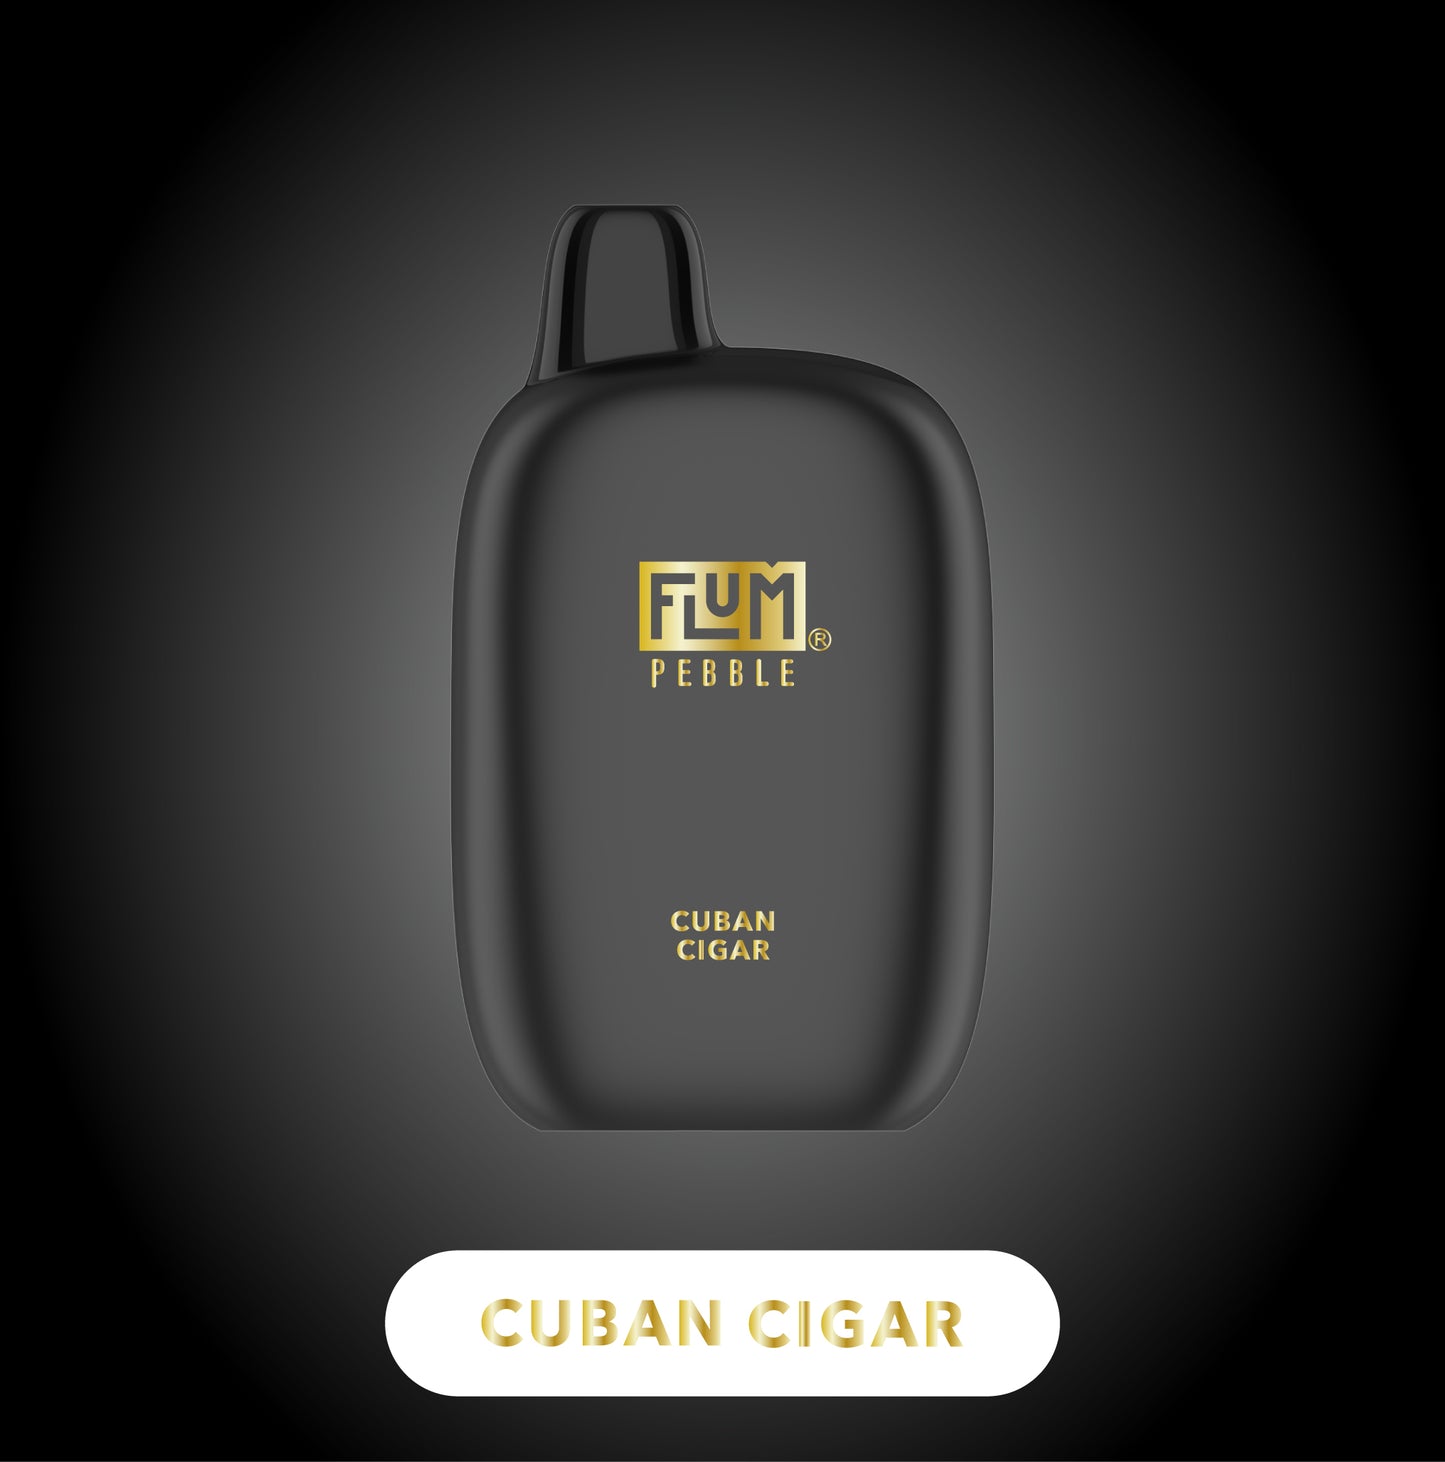 FLUM Pebble - Cuba Cigar